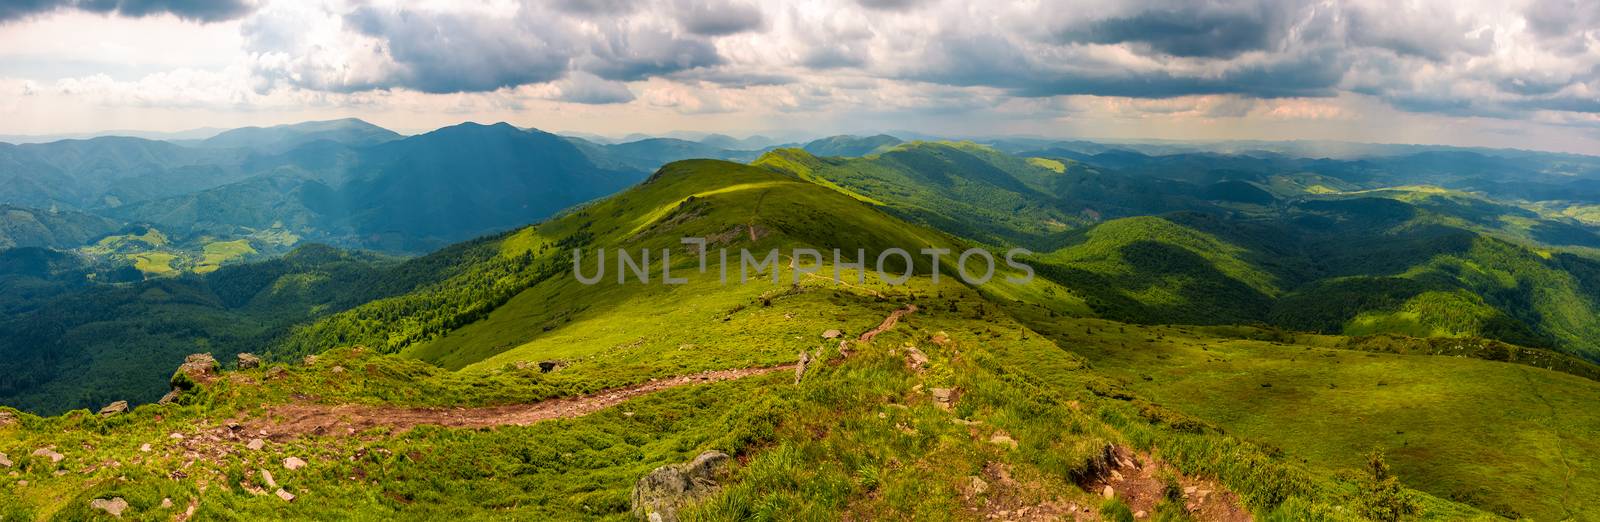 panorama of great Carpathian water dividing ridge by Pellinni